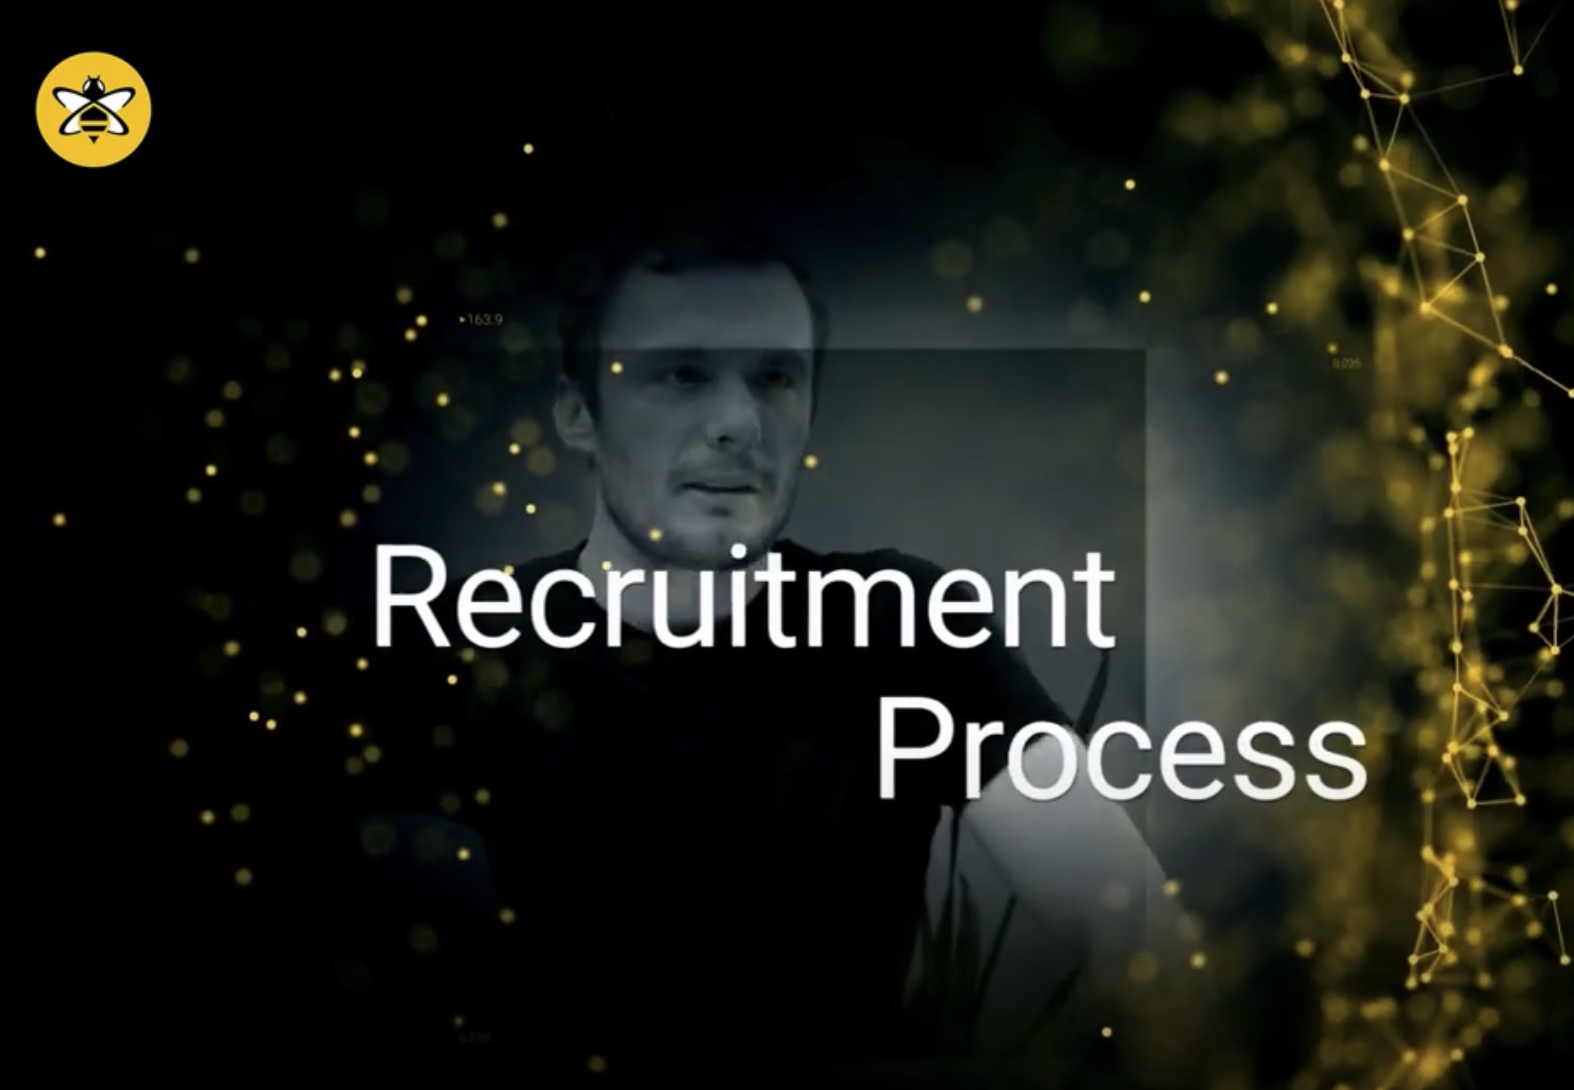 Career at HiveMQ: The Recruitment Process